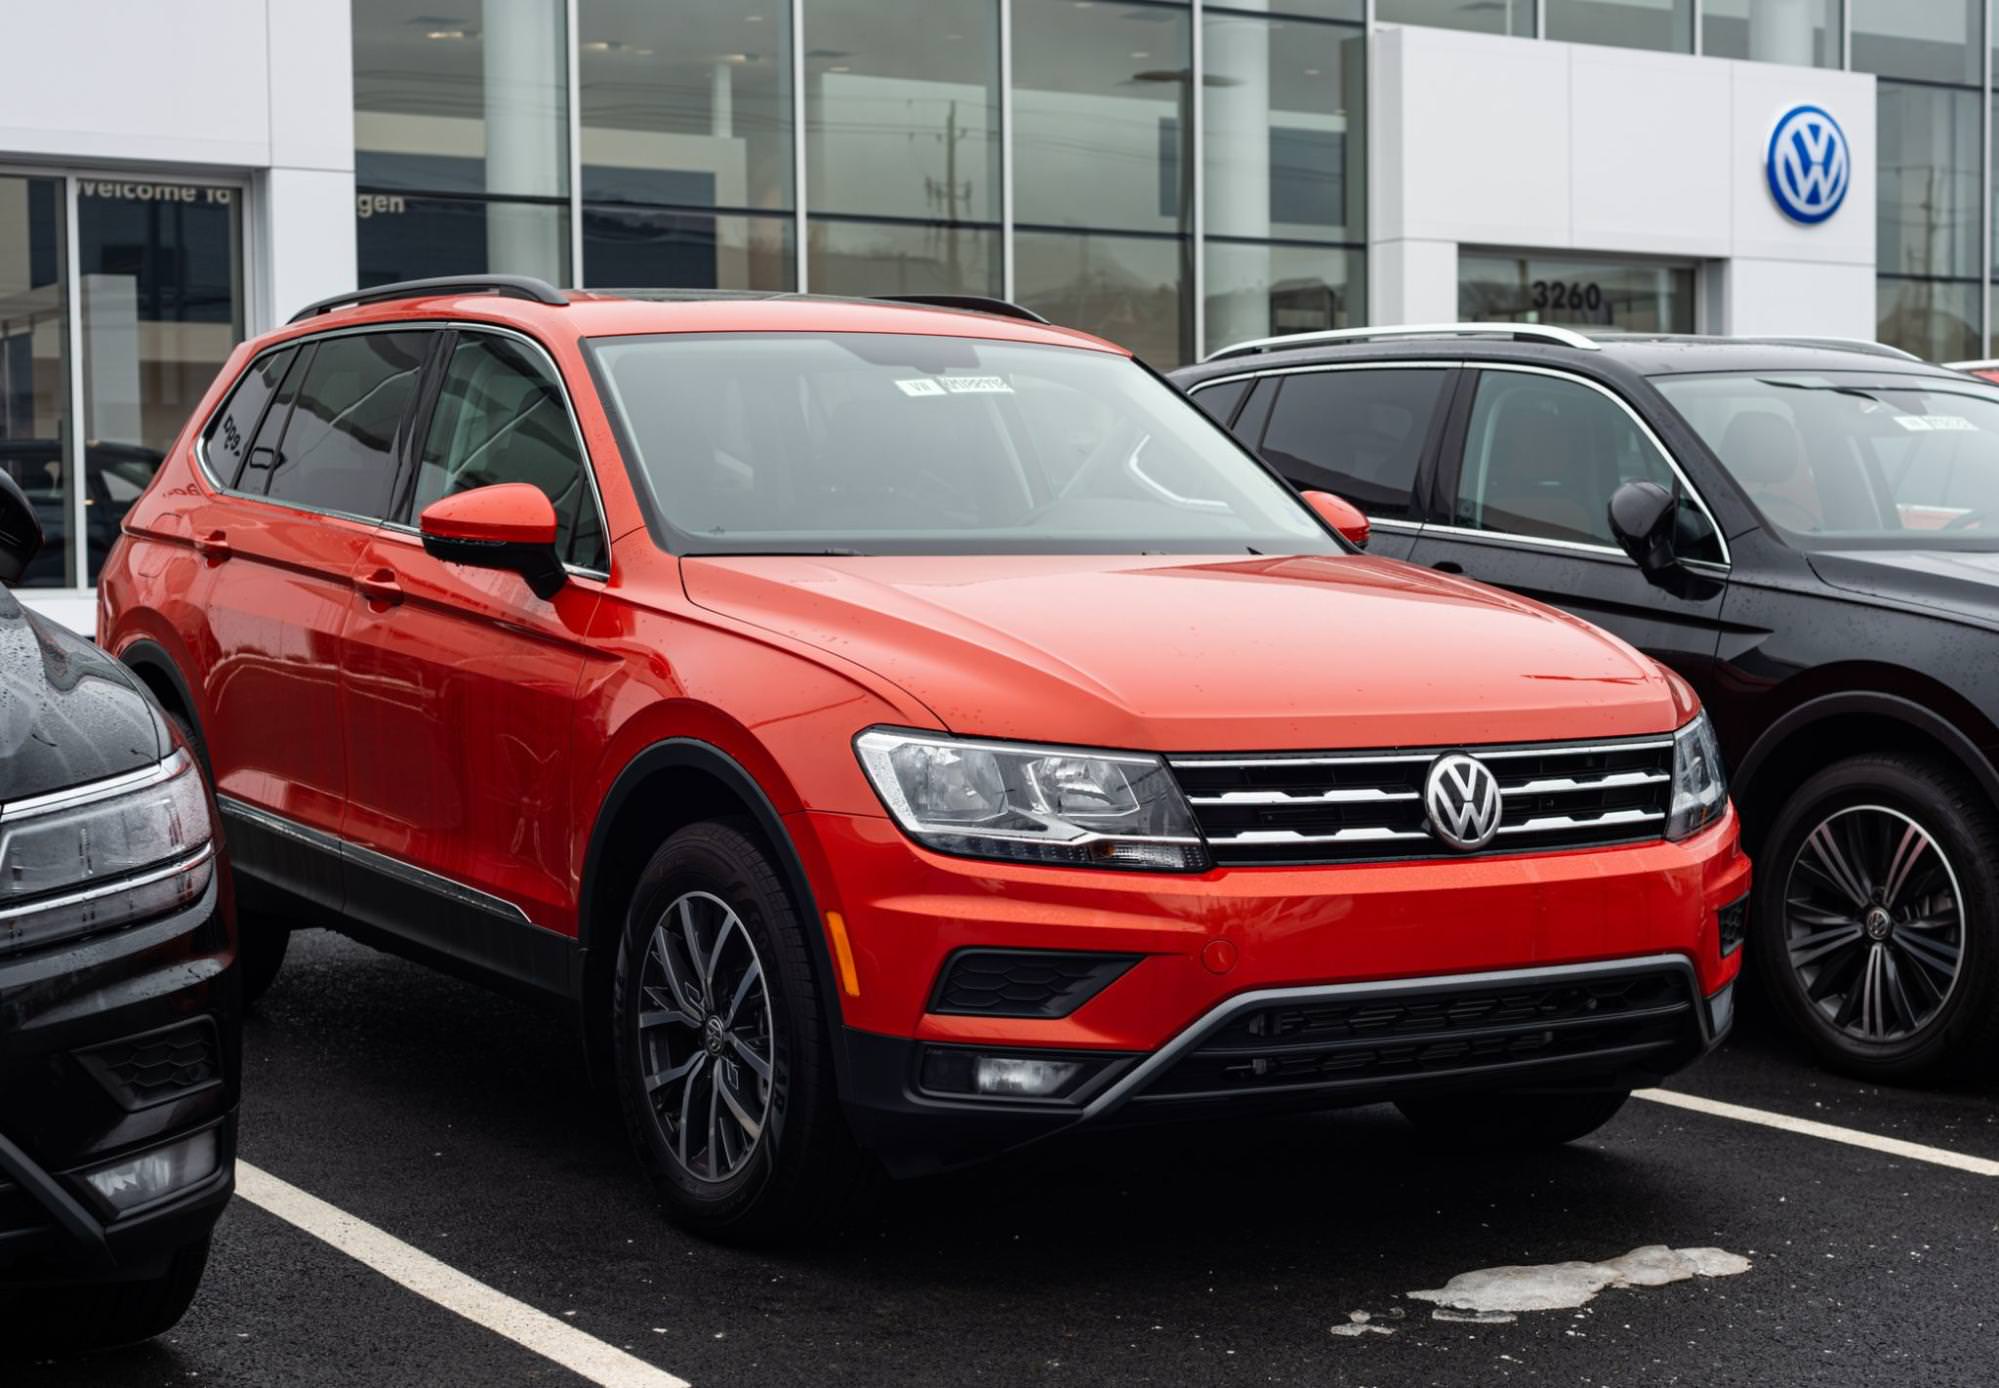 Volkswagen Tiguan rouge sur un parking